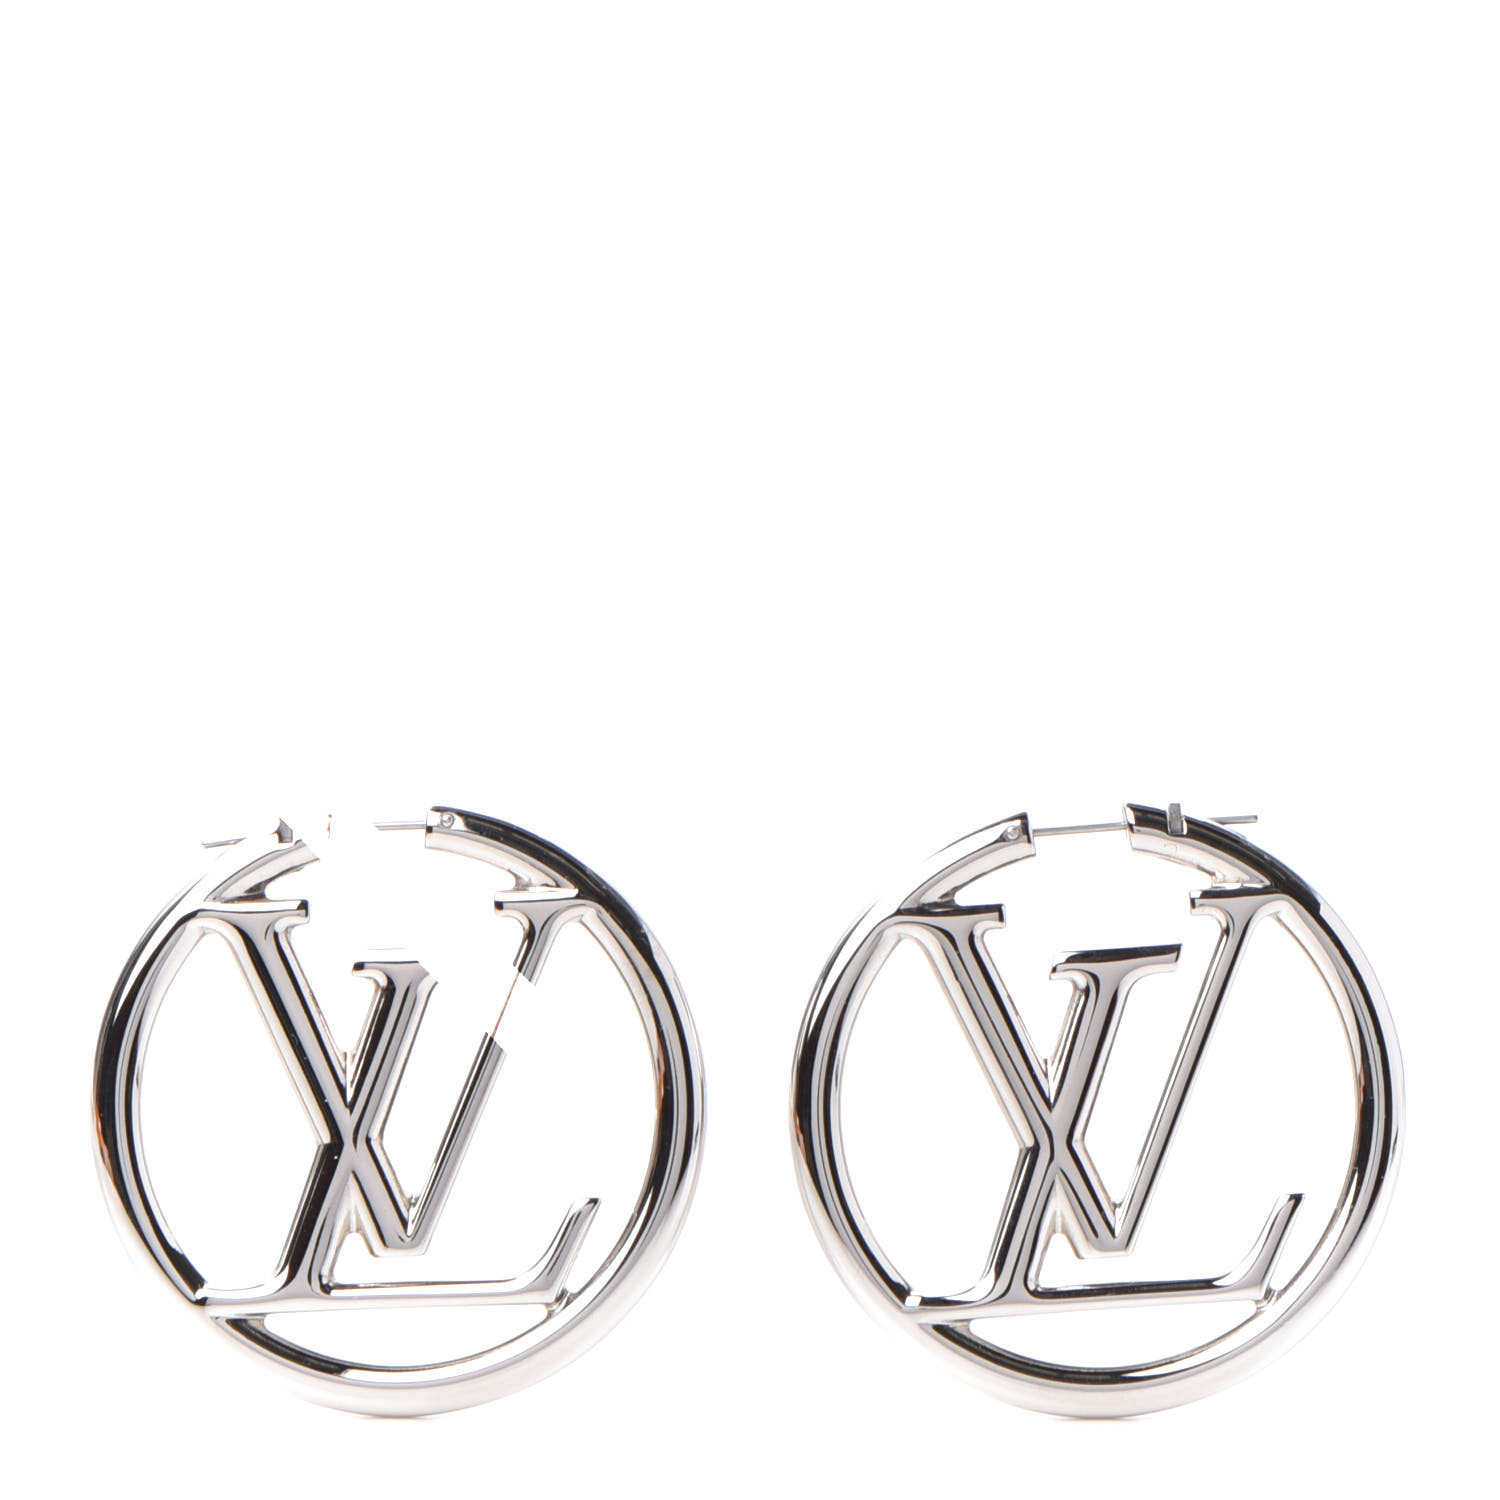 Louis Vuitton Fall In Love Earrings Pm (FALL IN LOVE HEART EARRINGS PM,  LIMITED EDITION, M00463)